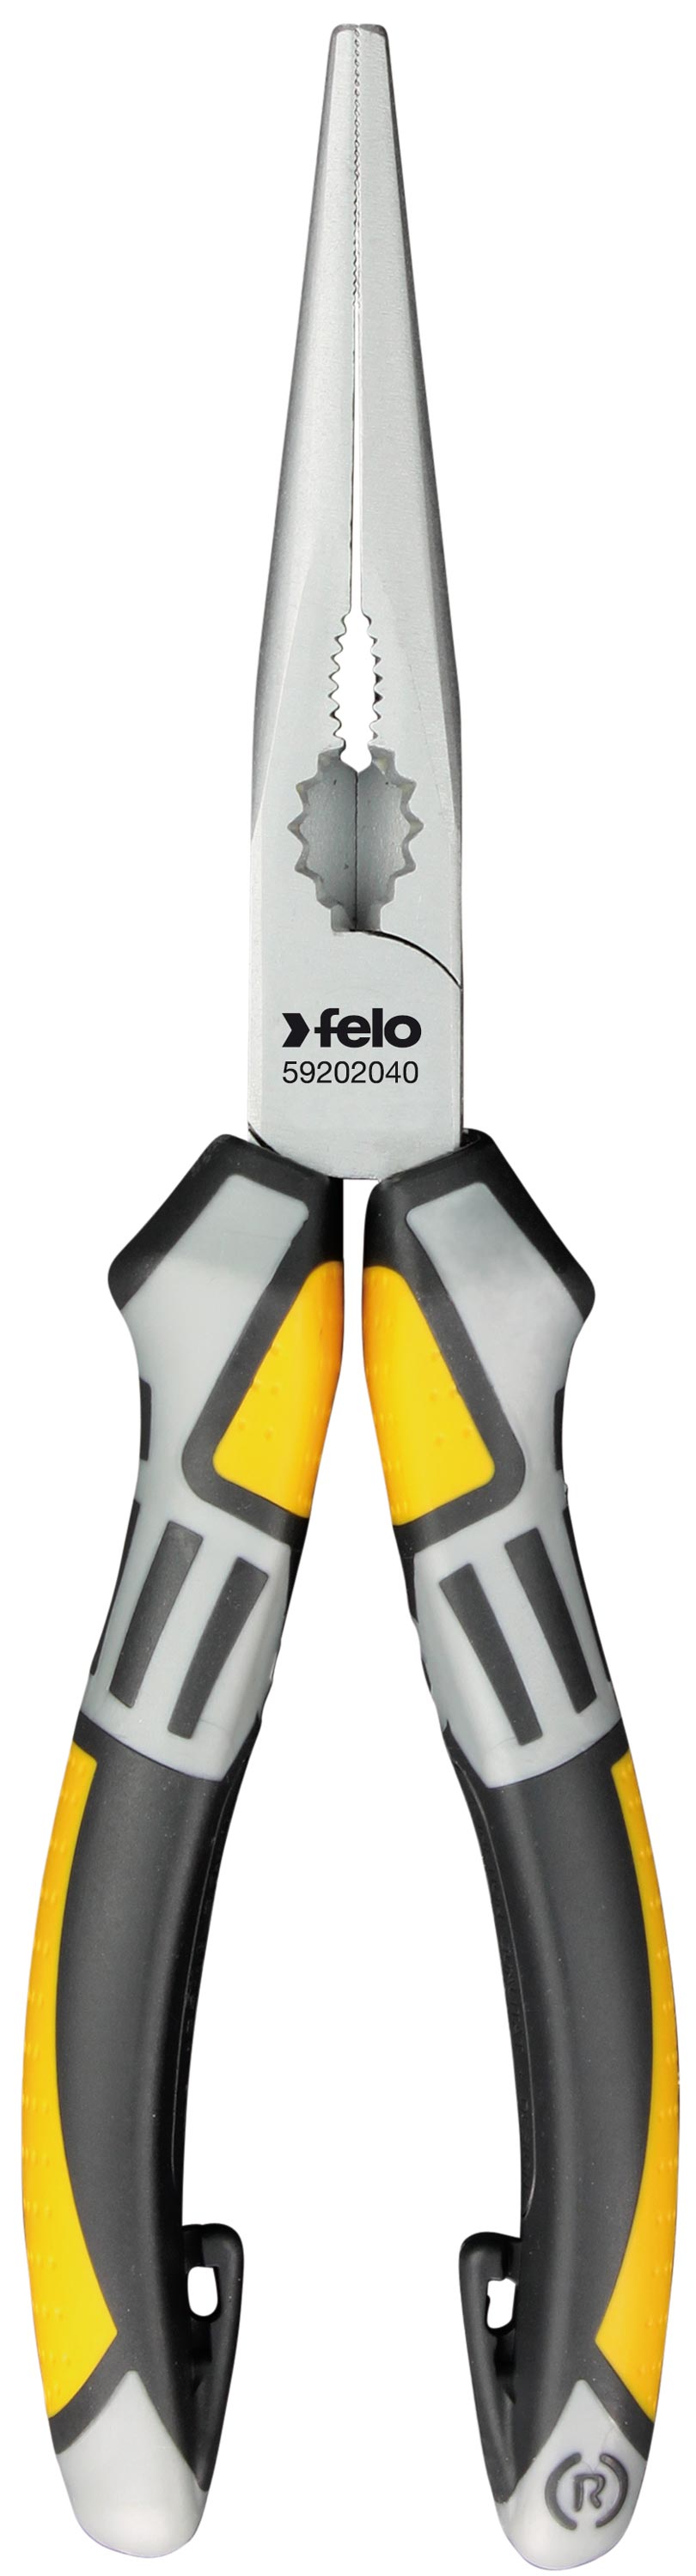 Felo Telefonzange 3K gerade - 205 mm Spitzzange - Serie 592 (FL-59202040) Bild-01